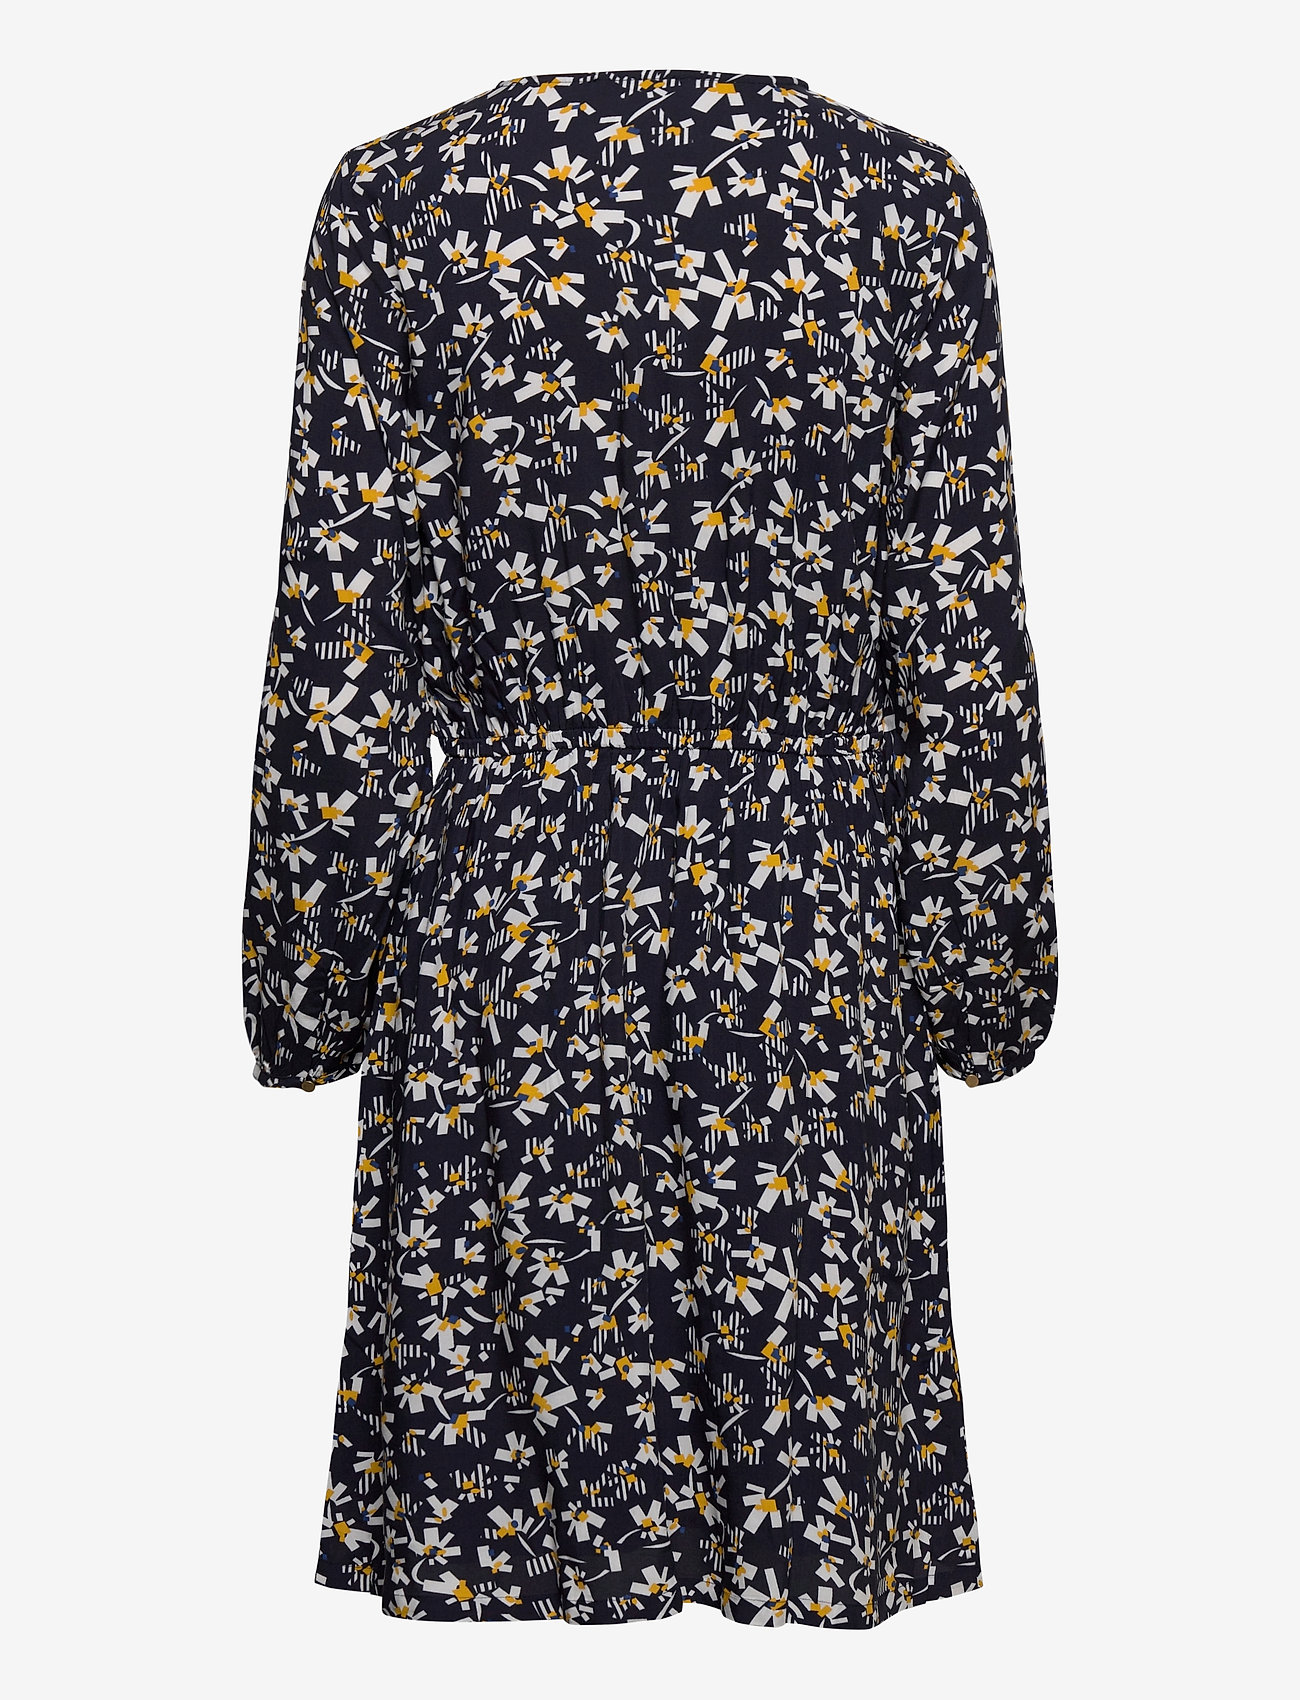 EDC by Esprit - Dresses light woven - korte jurken - navy 4 - 1